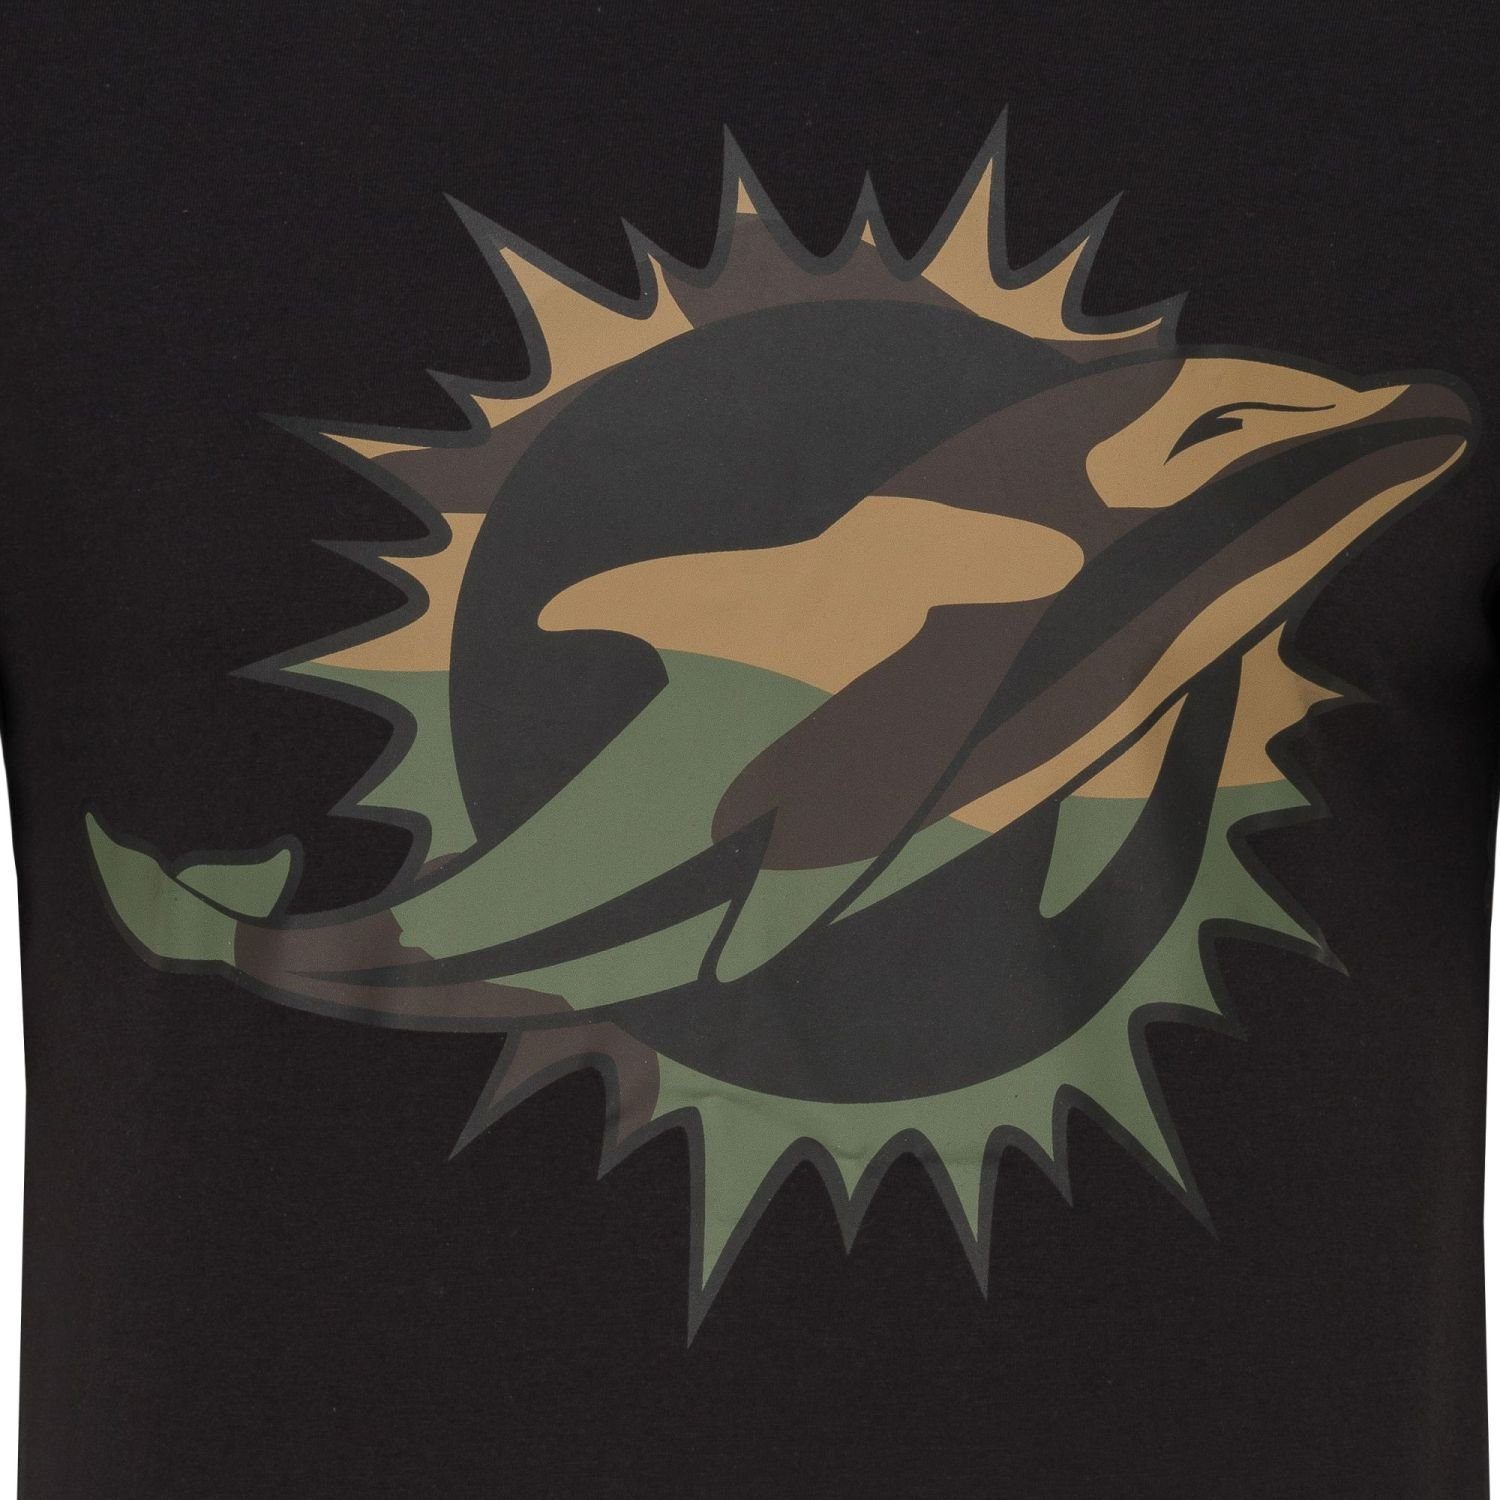 Print-Shirt Miami Teams Era Football Dolphins New NFL 2.0